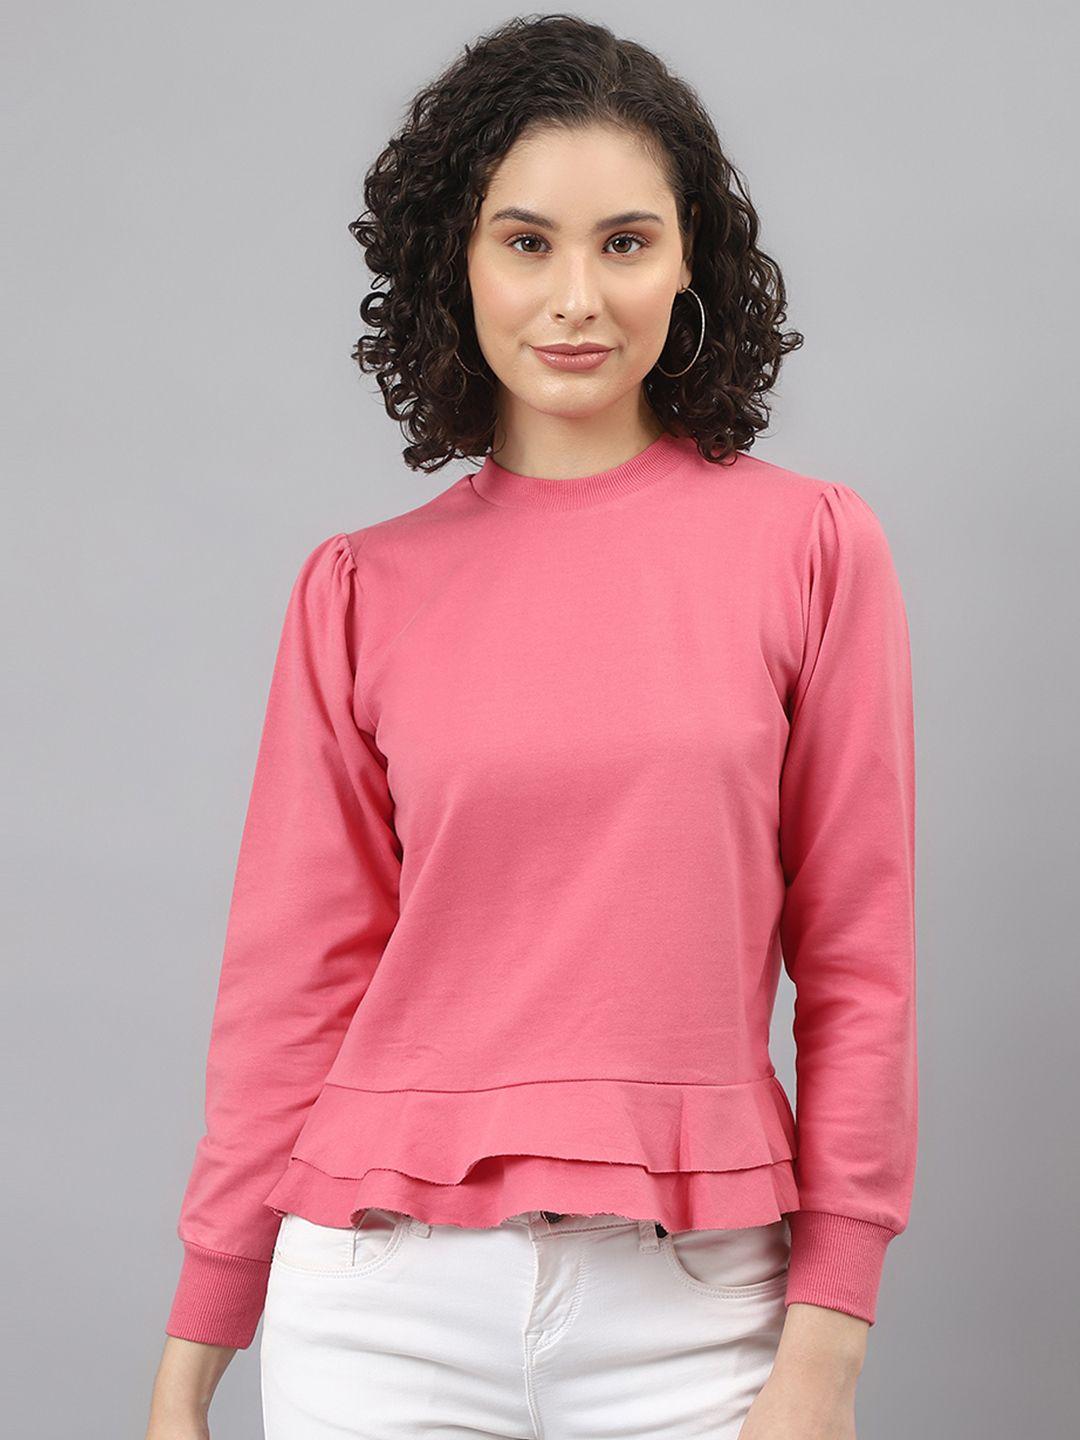 deebaco women pink sweatshirt with ruffles